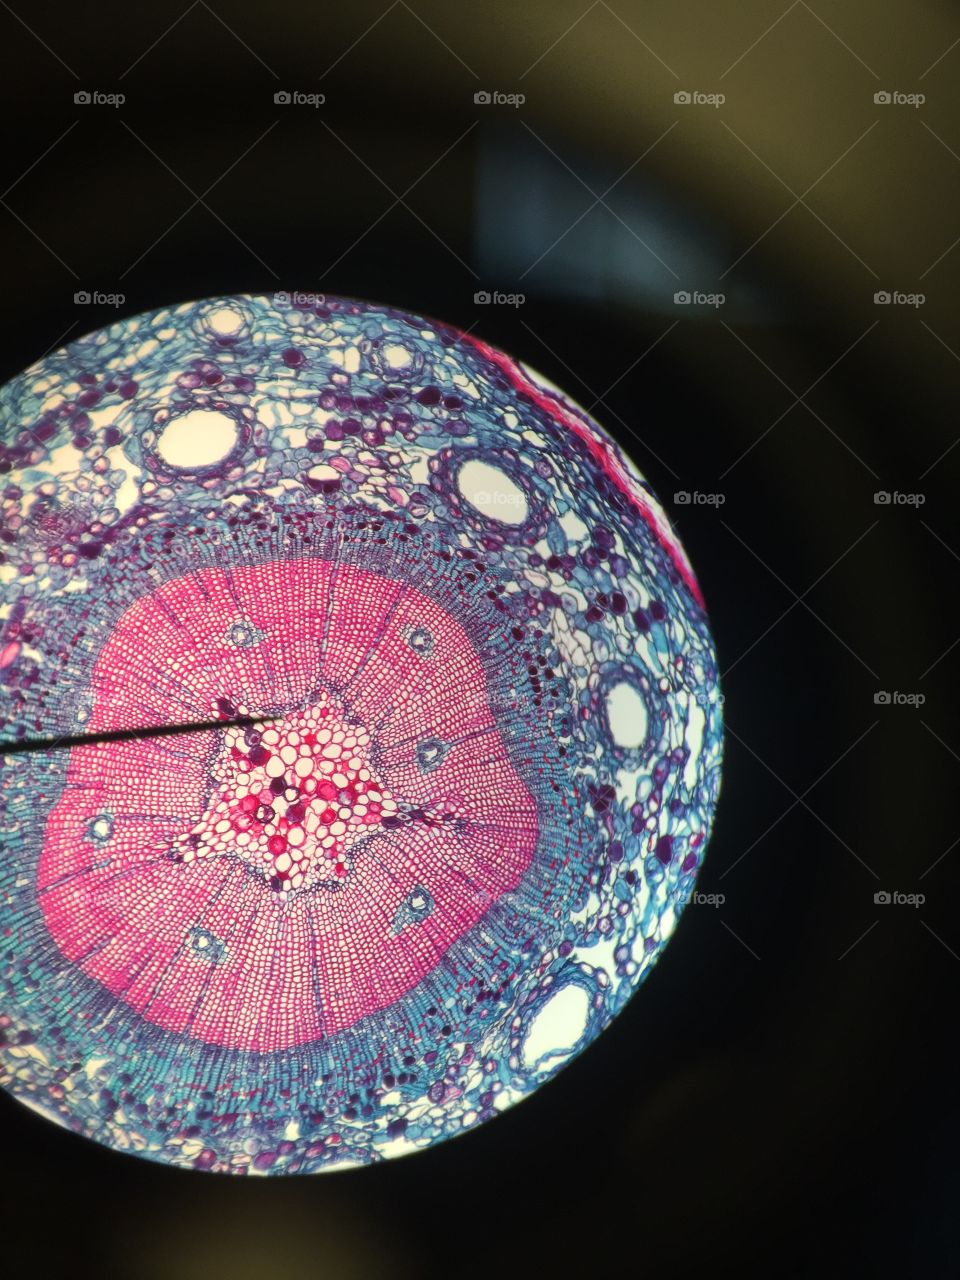 Under the microscope 